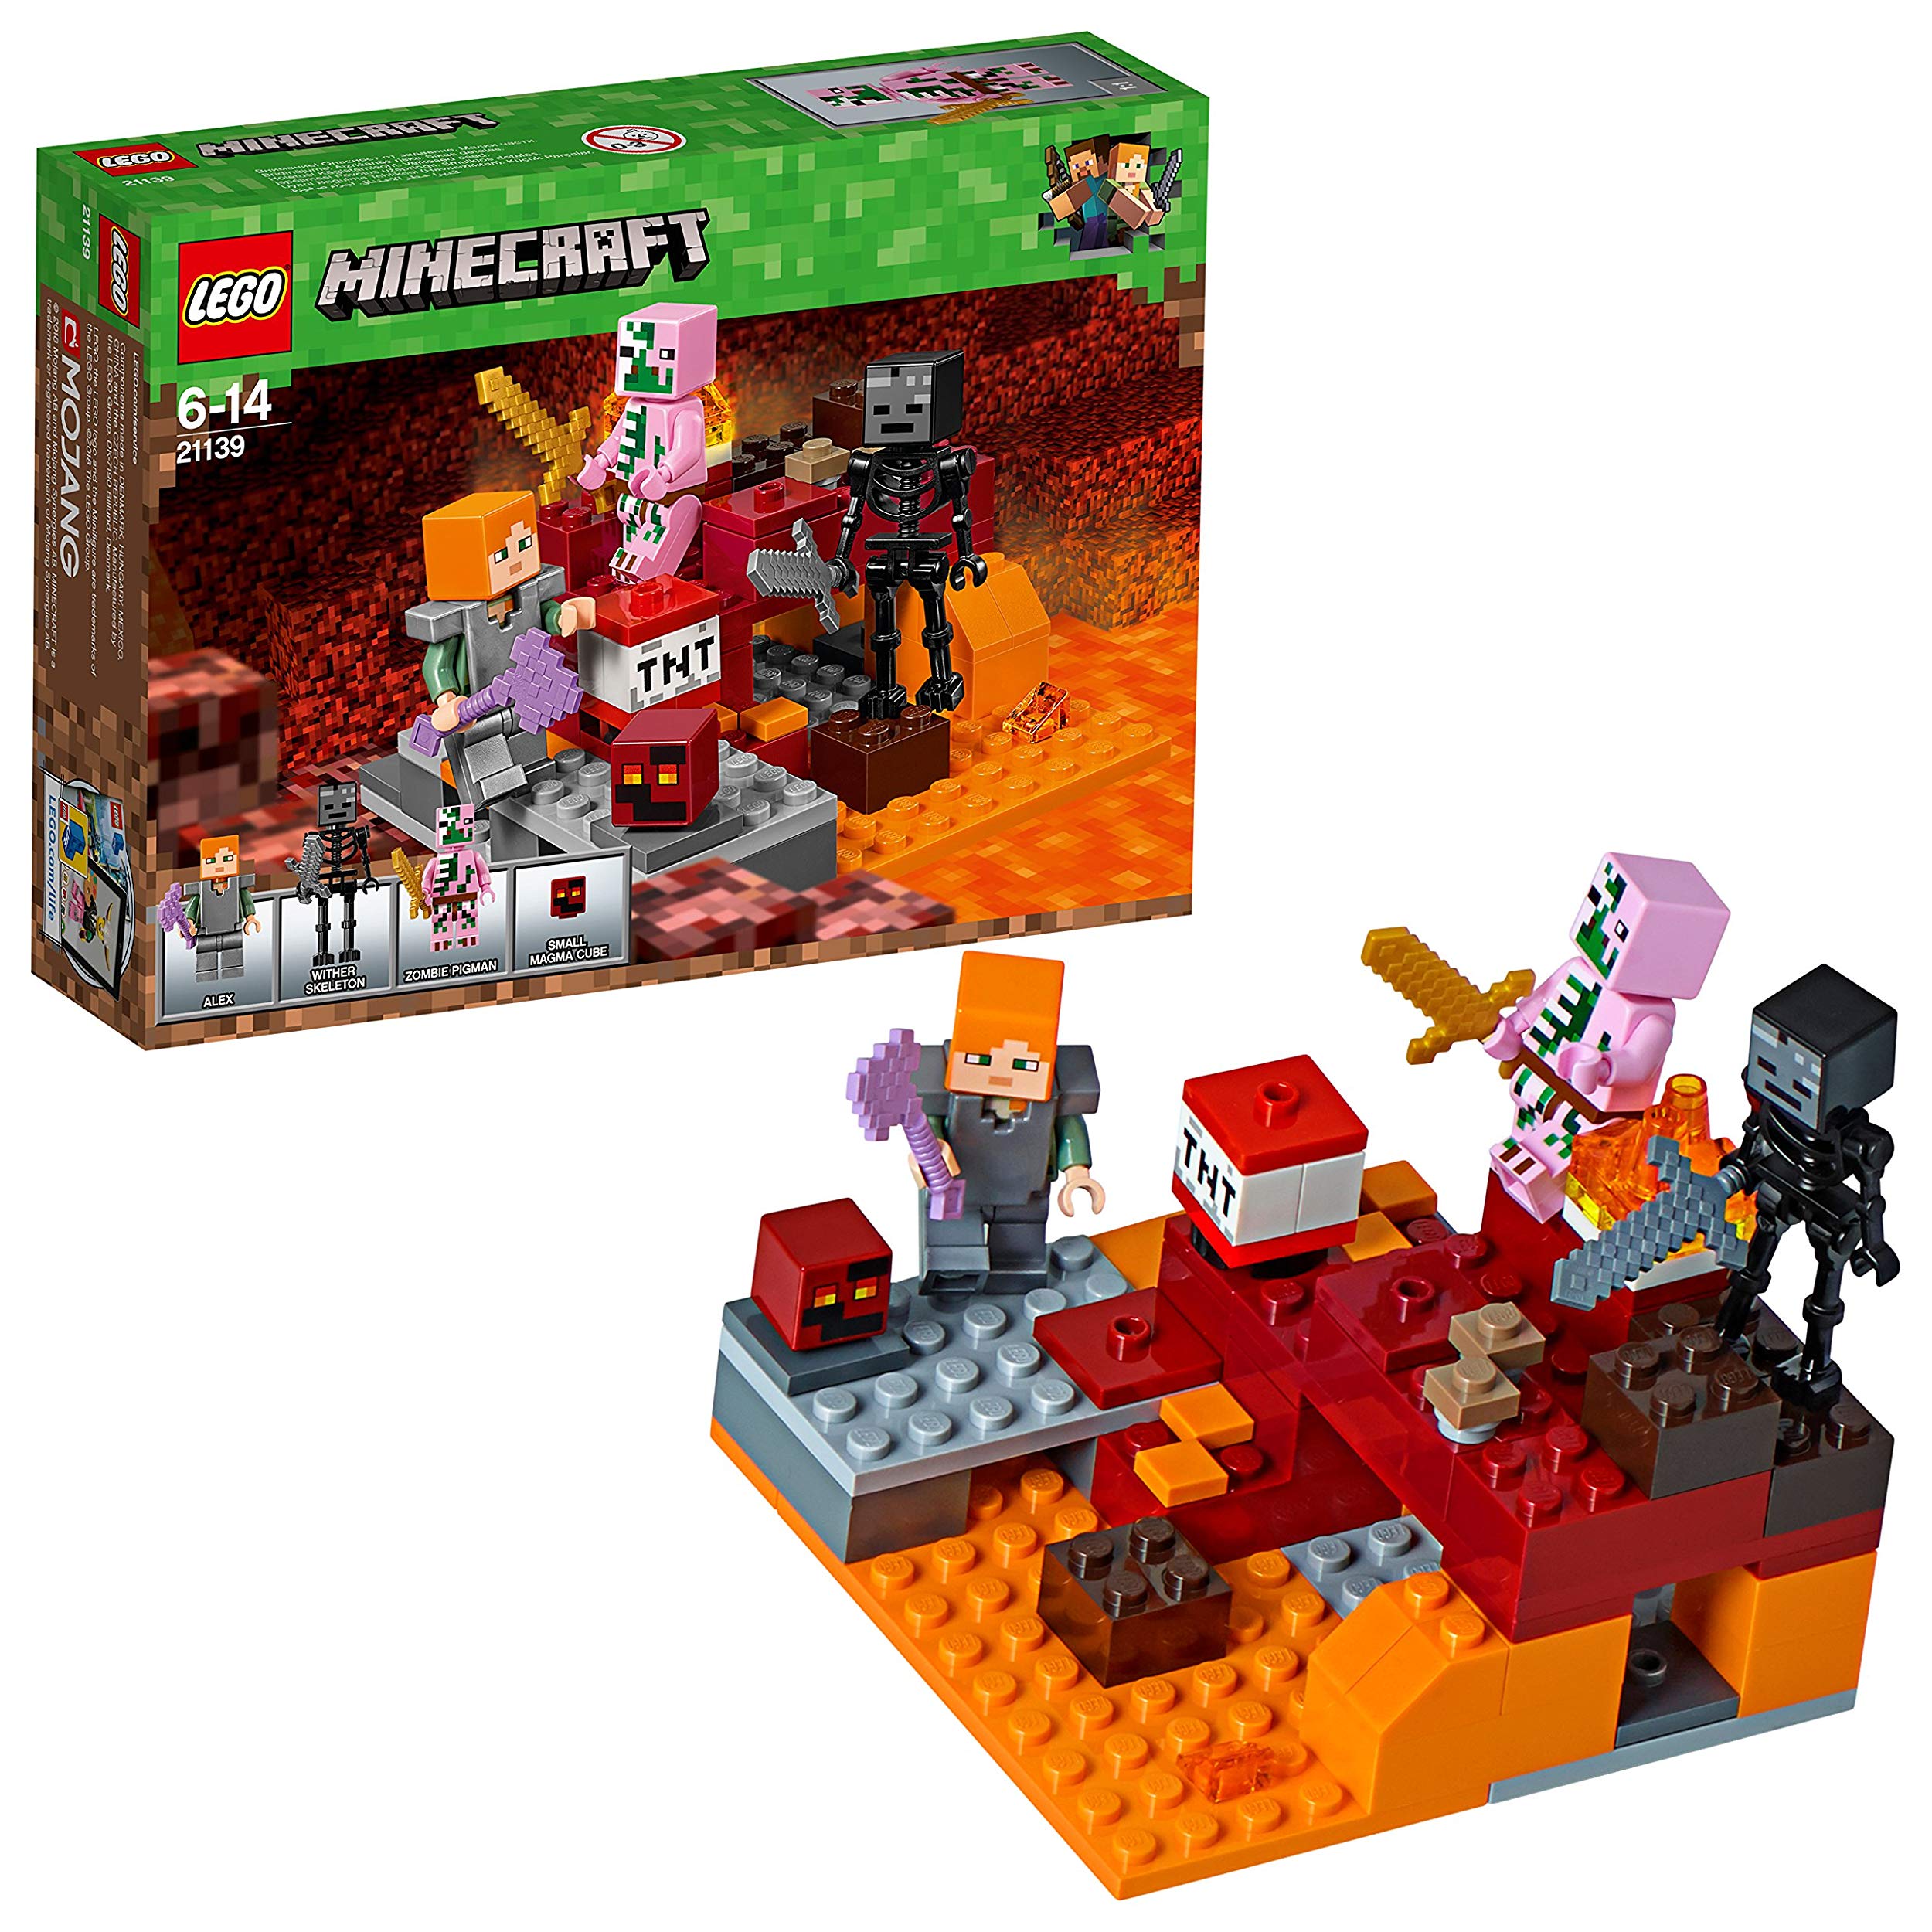 Lego Minecraft Nether Adventure Fight Construction Toy